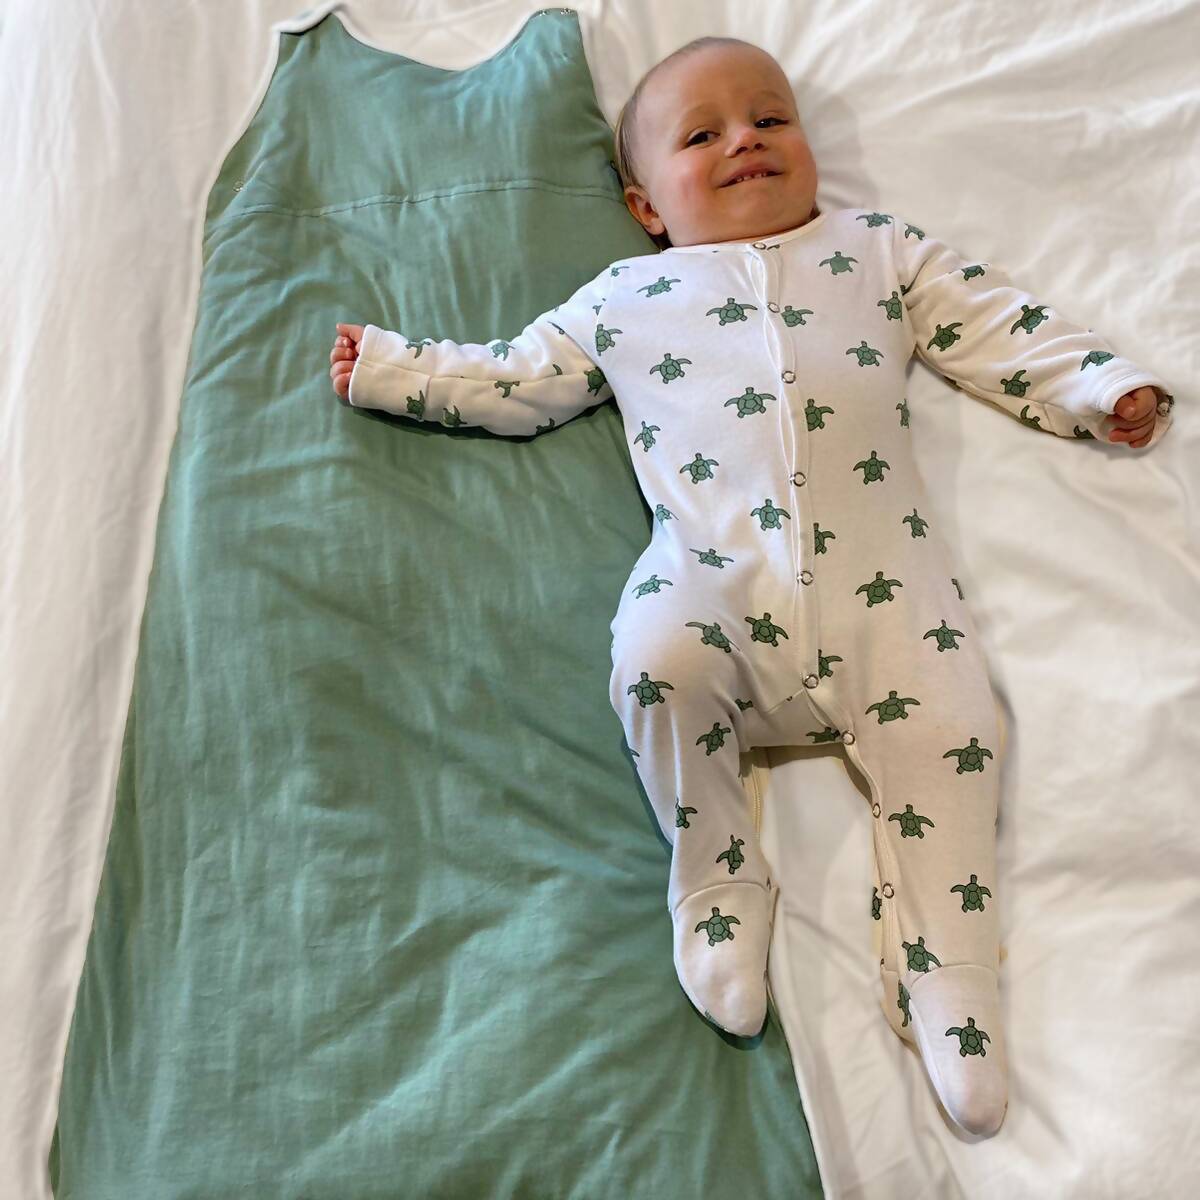 baby-in-sleepsuit-with-sleeping-bag (1)